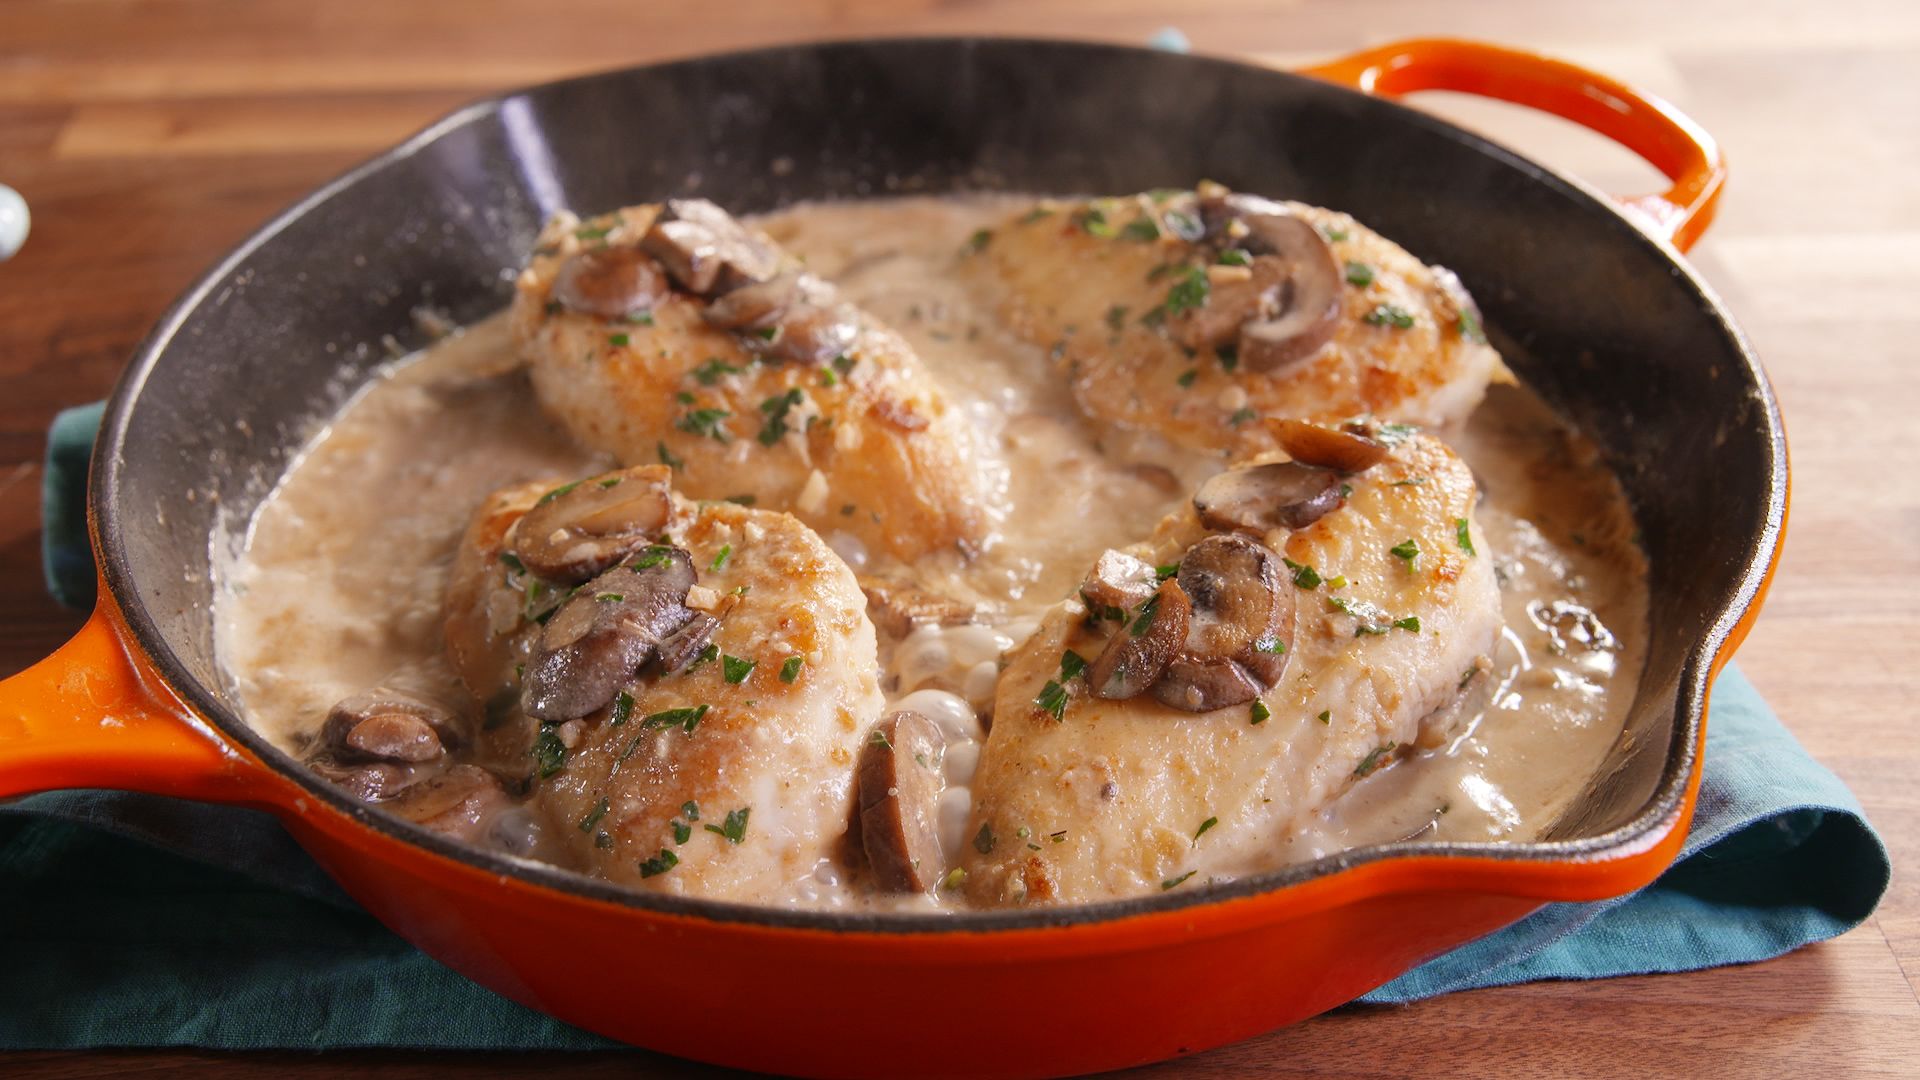 Slow Cooker Chicken Marsala - Creme De La Crumb